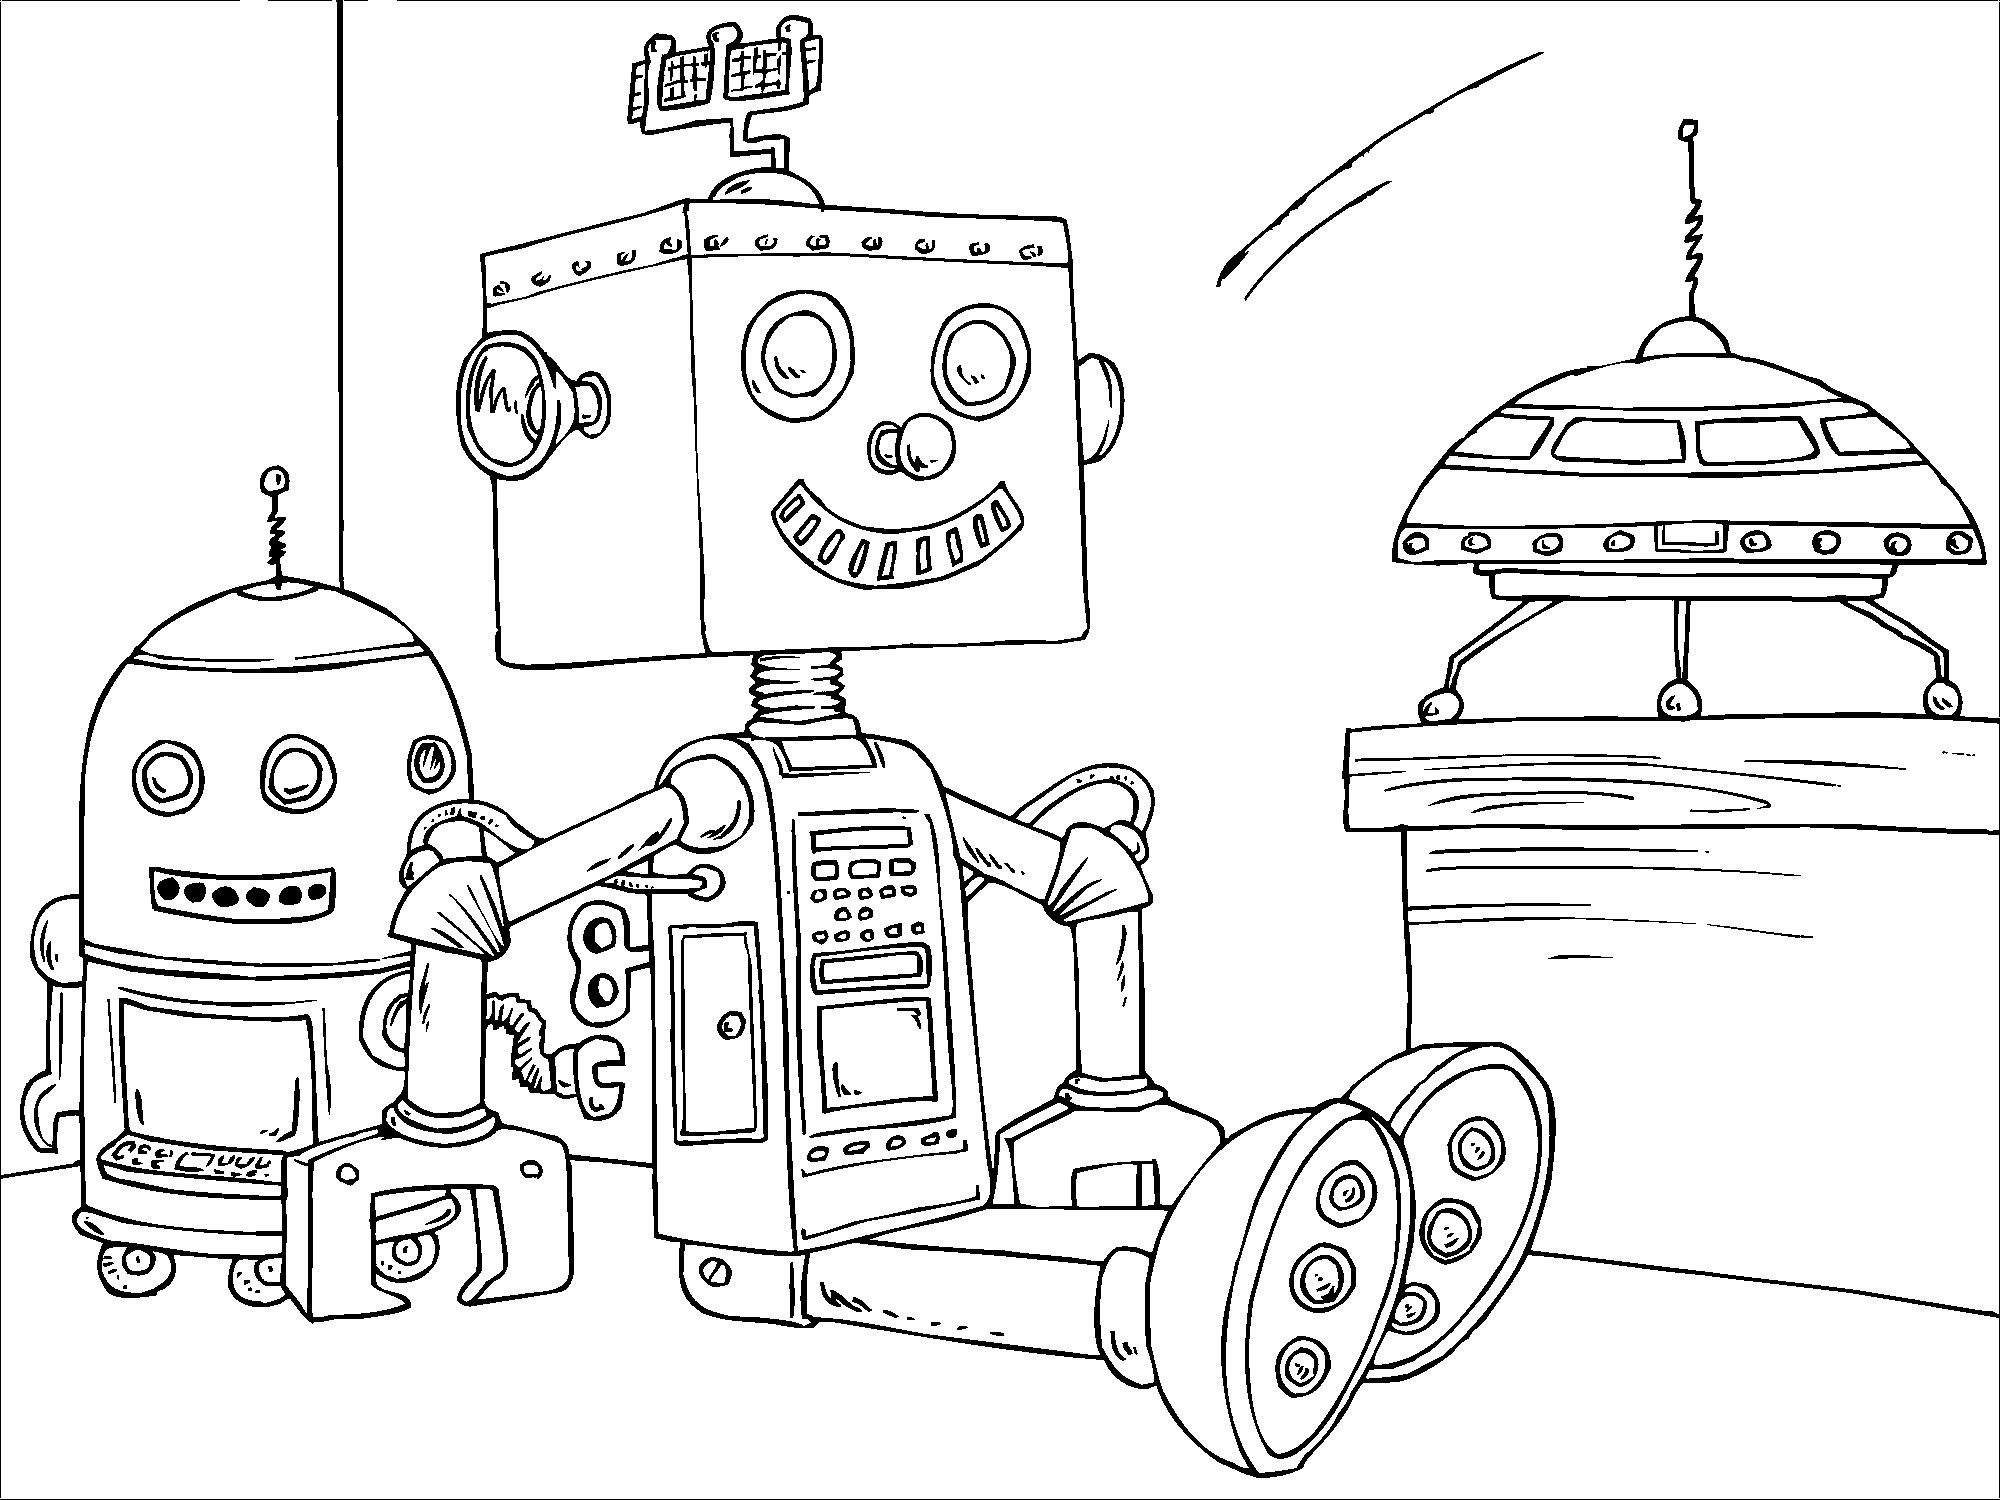 Dibujo para colorear robot de juguete